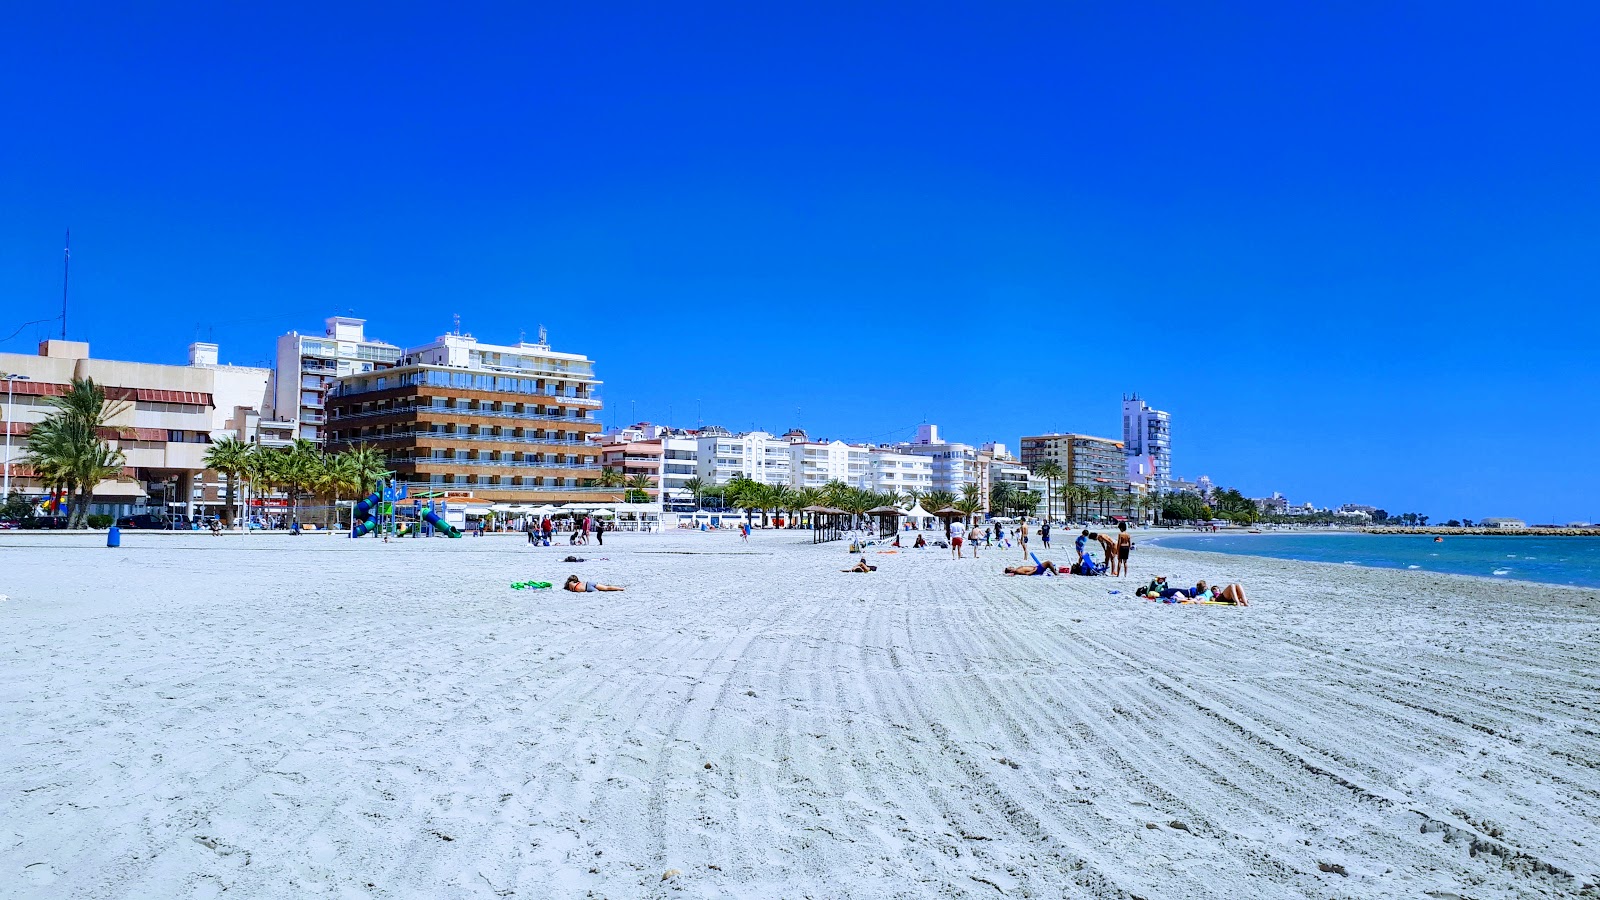 Photo of Beach Santa Pola 2 - popular place among relax connoisseurs